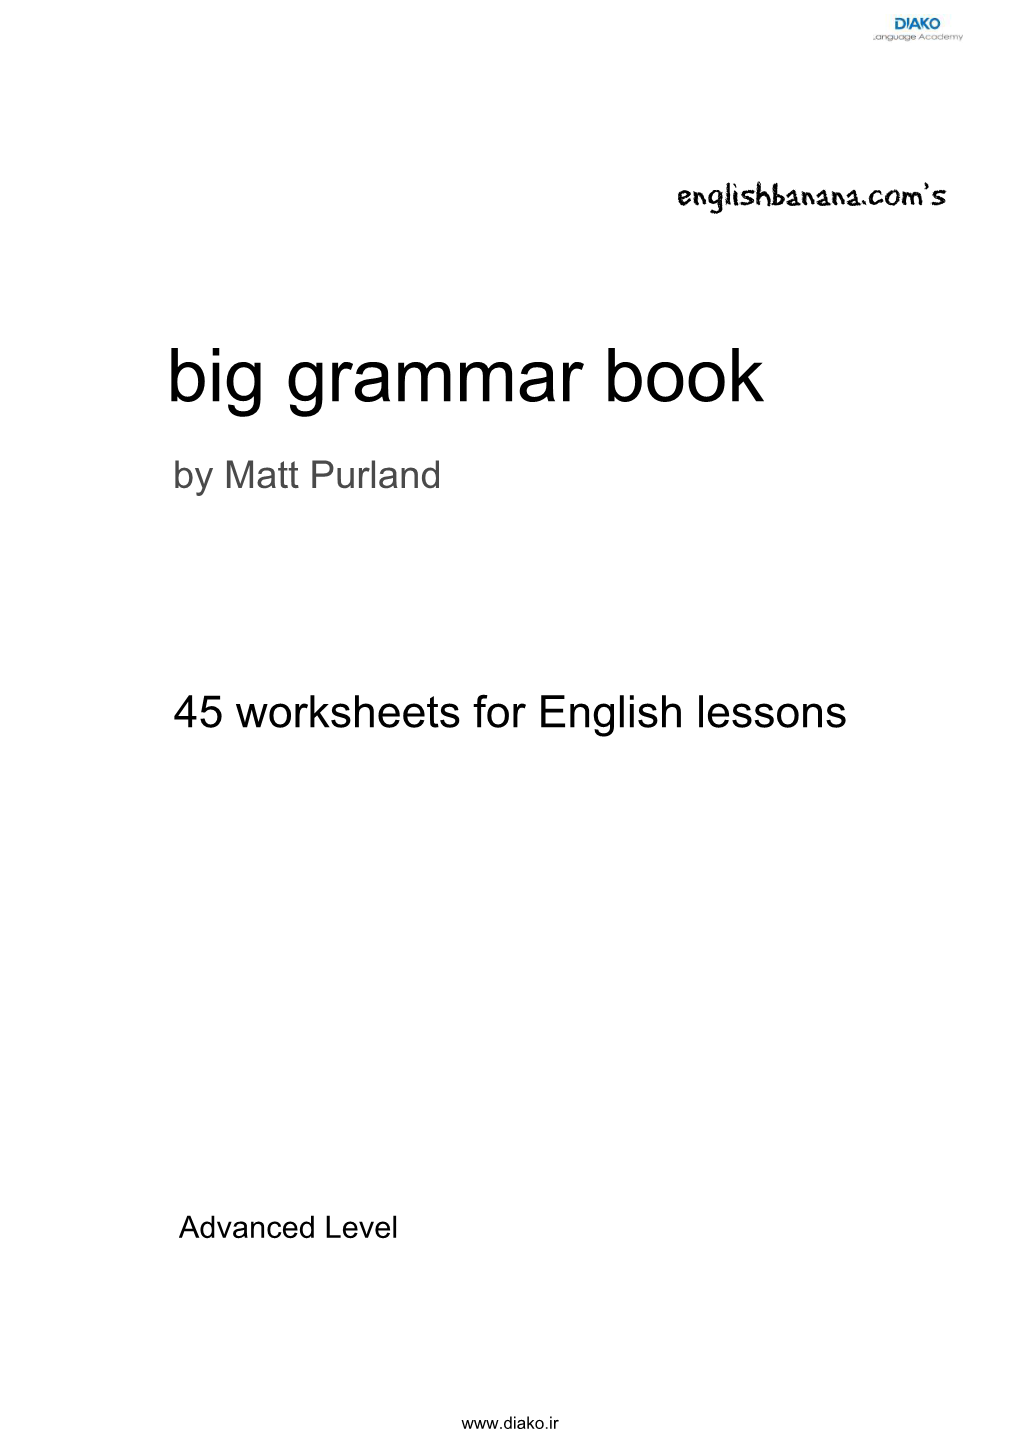 Big Grammar Book Advance Level